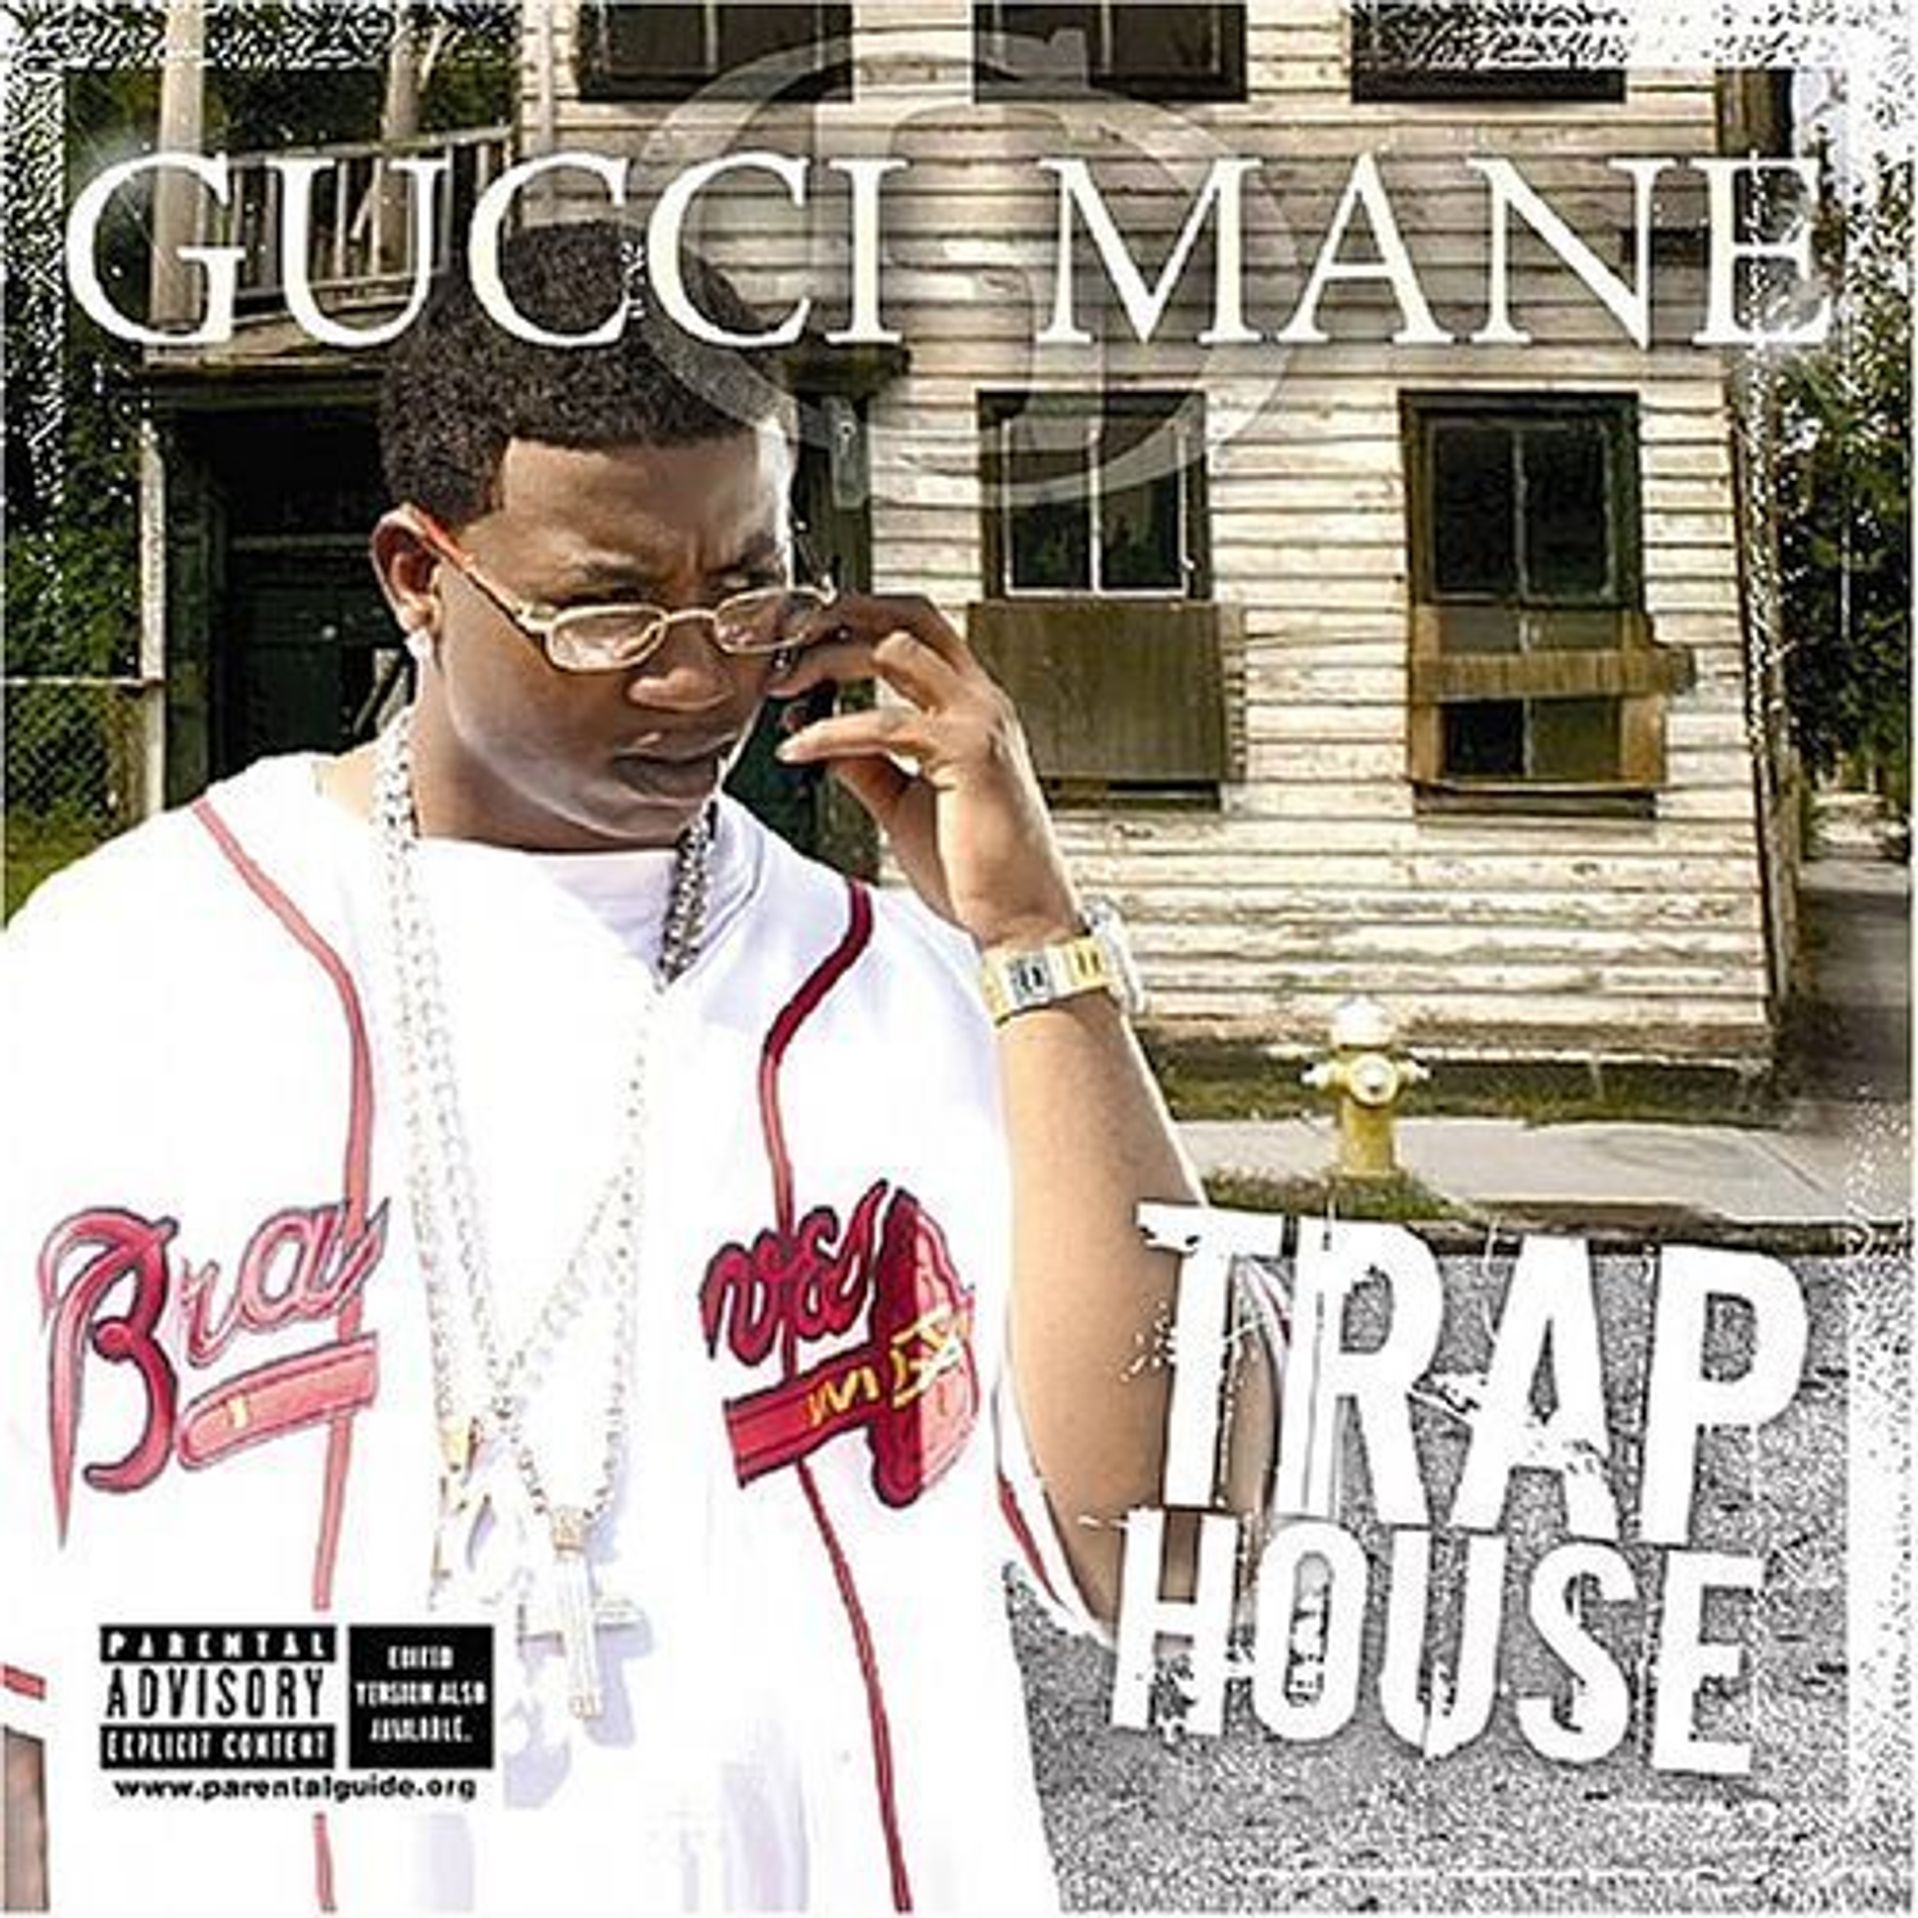 Album Title: Trap House by: Gucci Mane